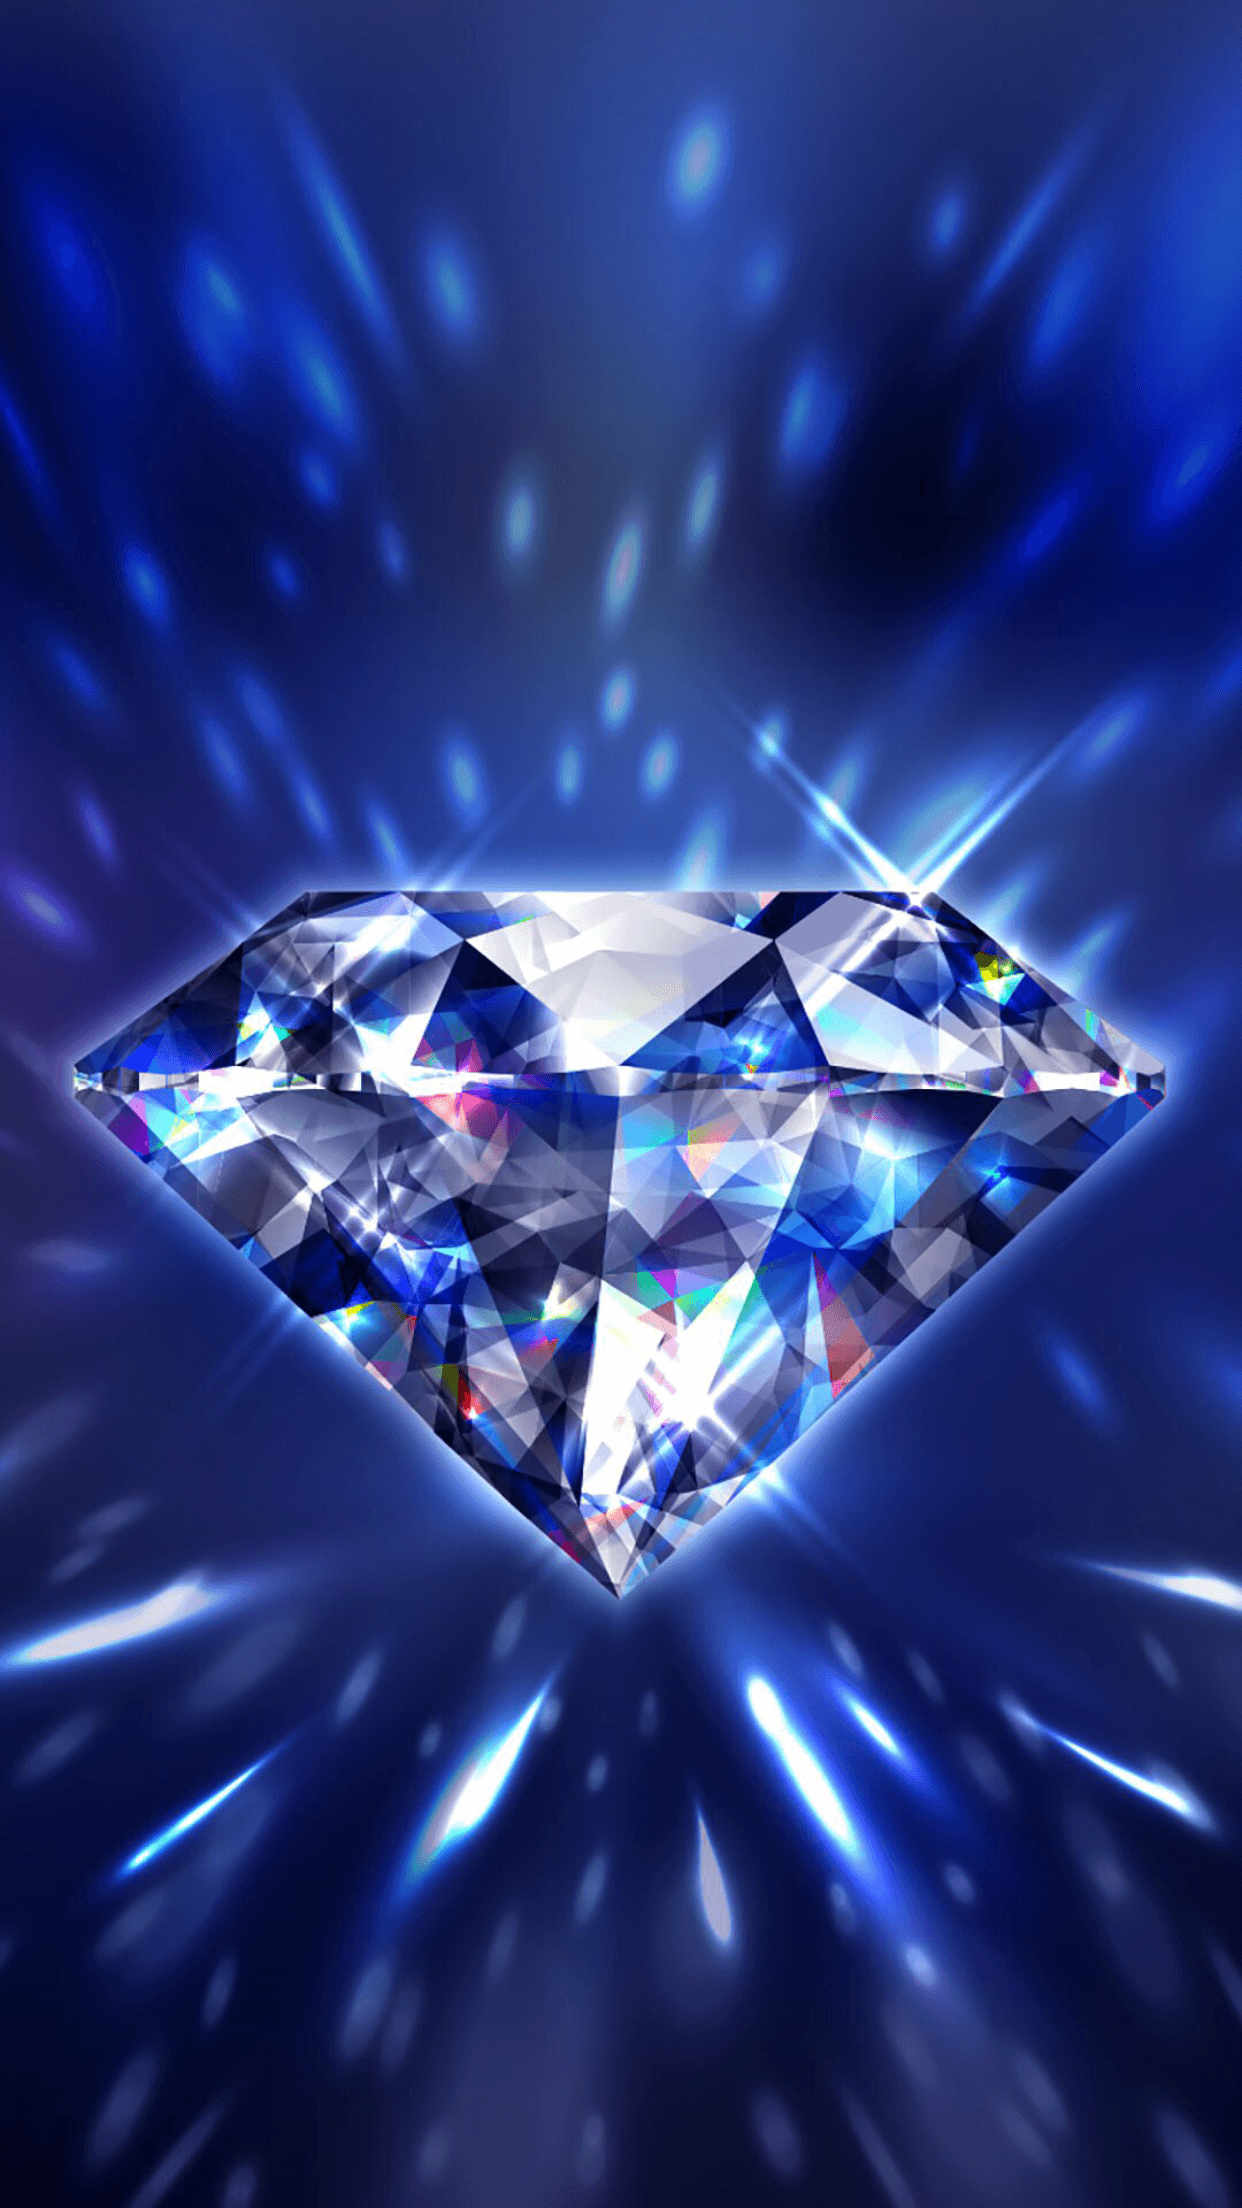 27+ Diamond Images | Download Free Images on Unsplash